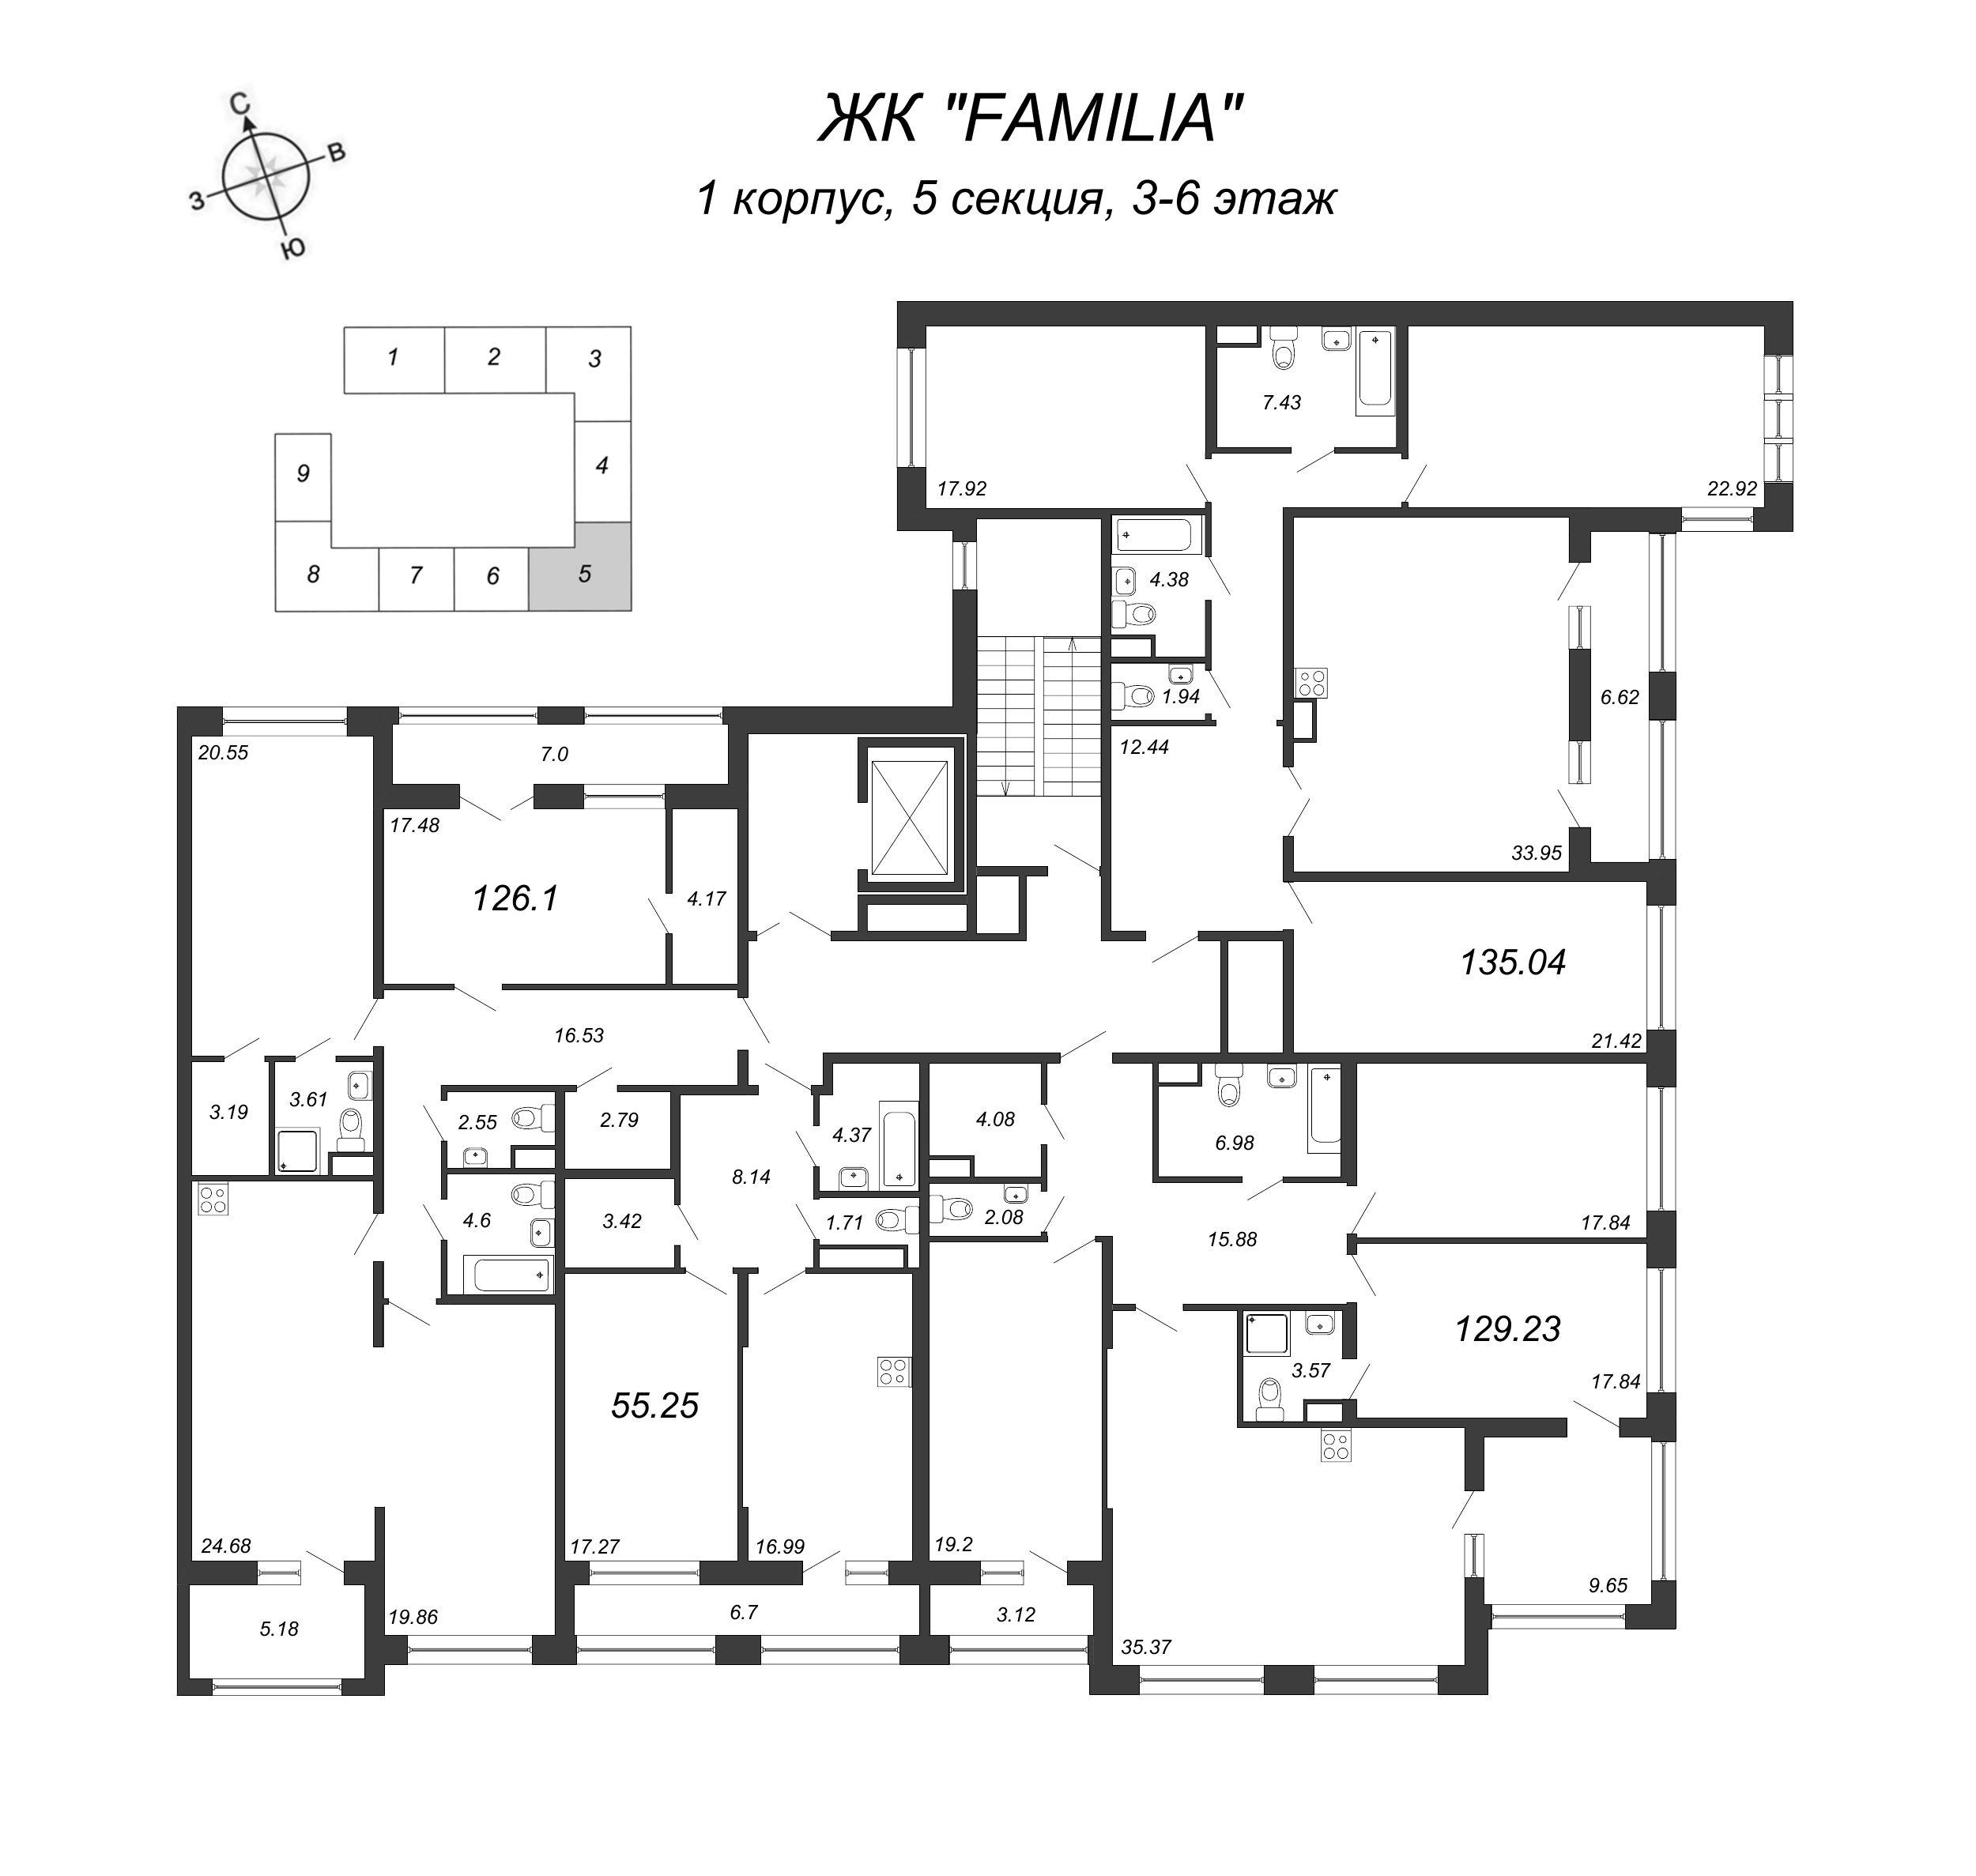 4-комнатная (Евро) квартира, 129.2 м² - планировка этажа